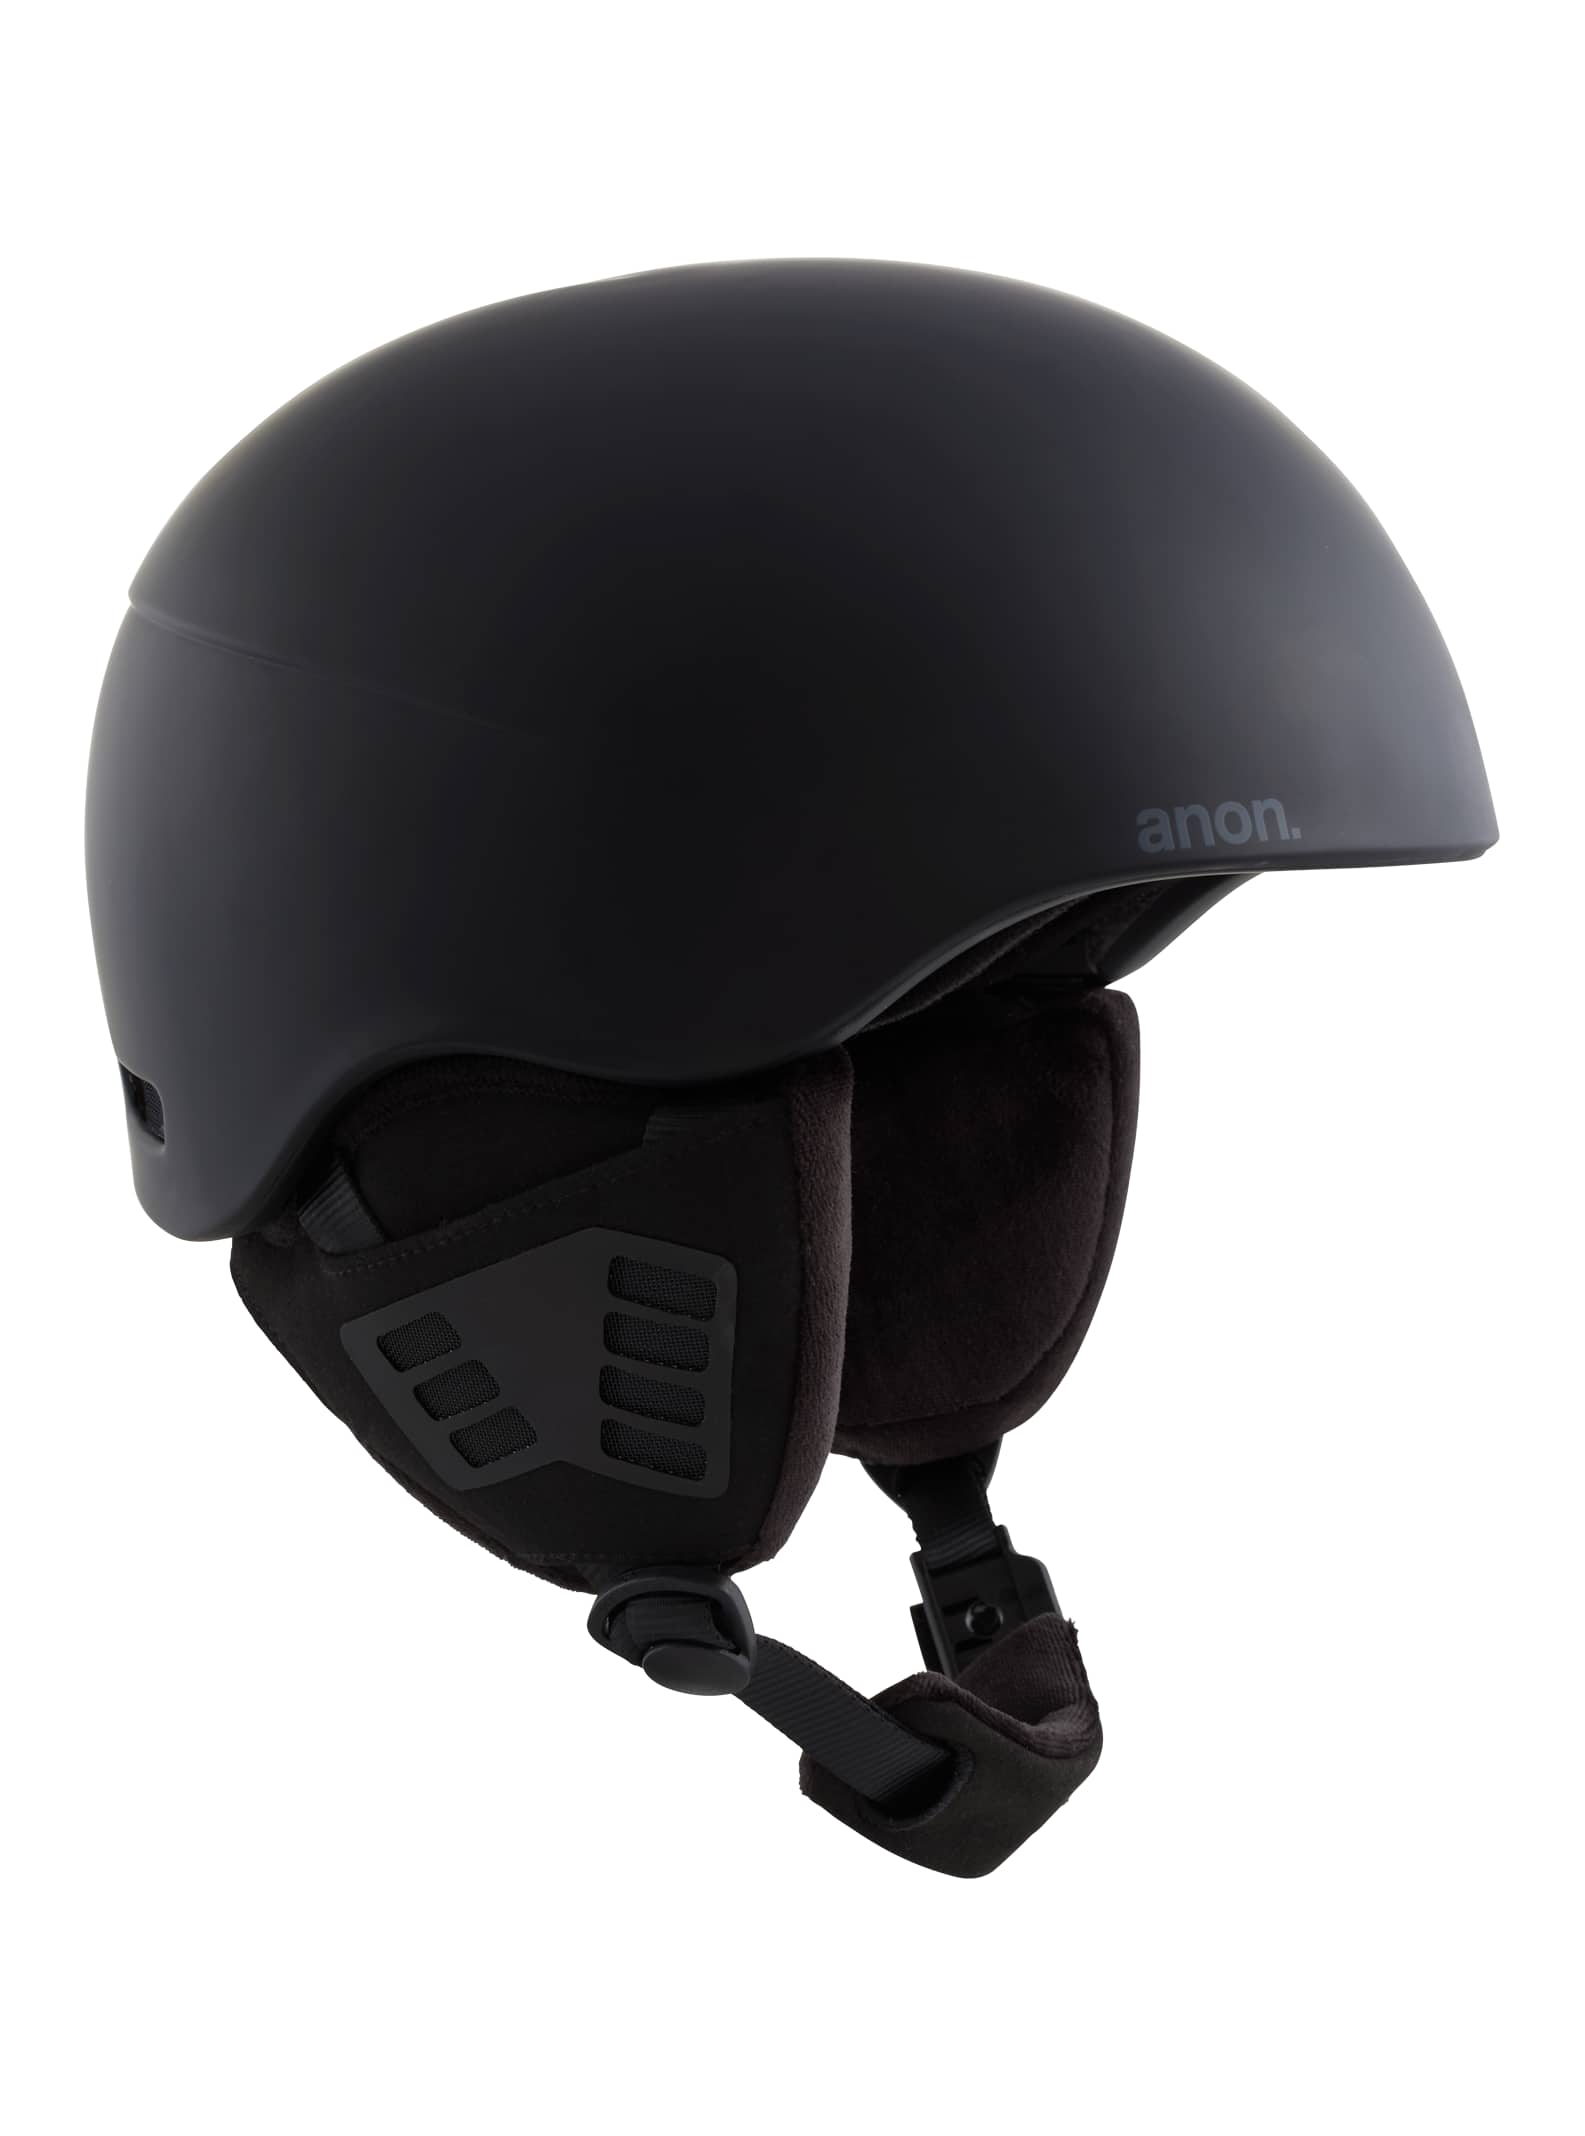 Anon Helo 2.0 Ski & Snowboard Helmet, Black, XL